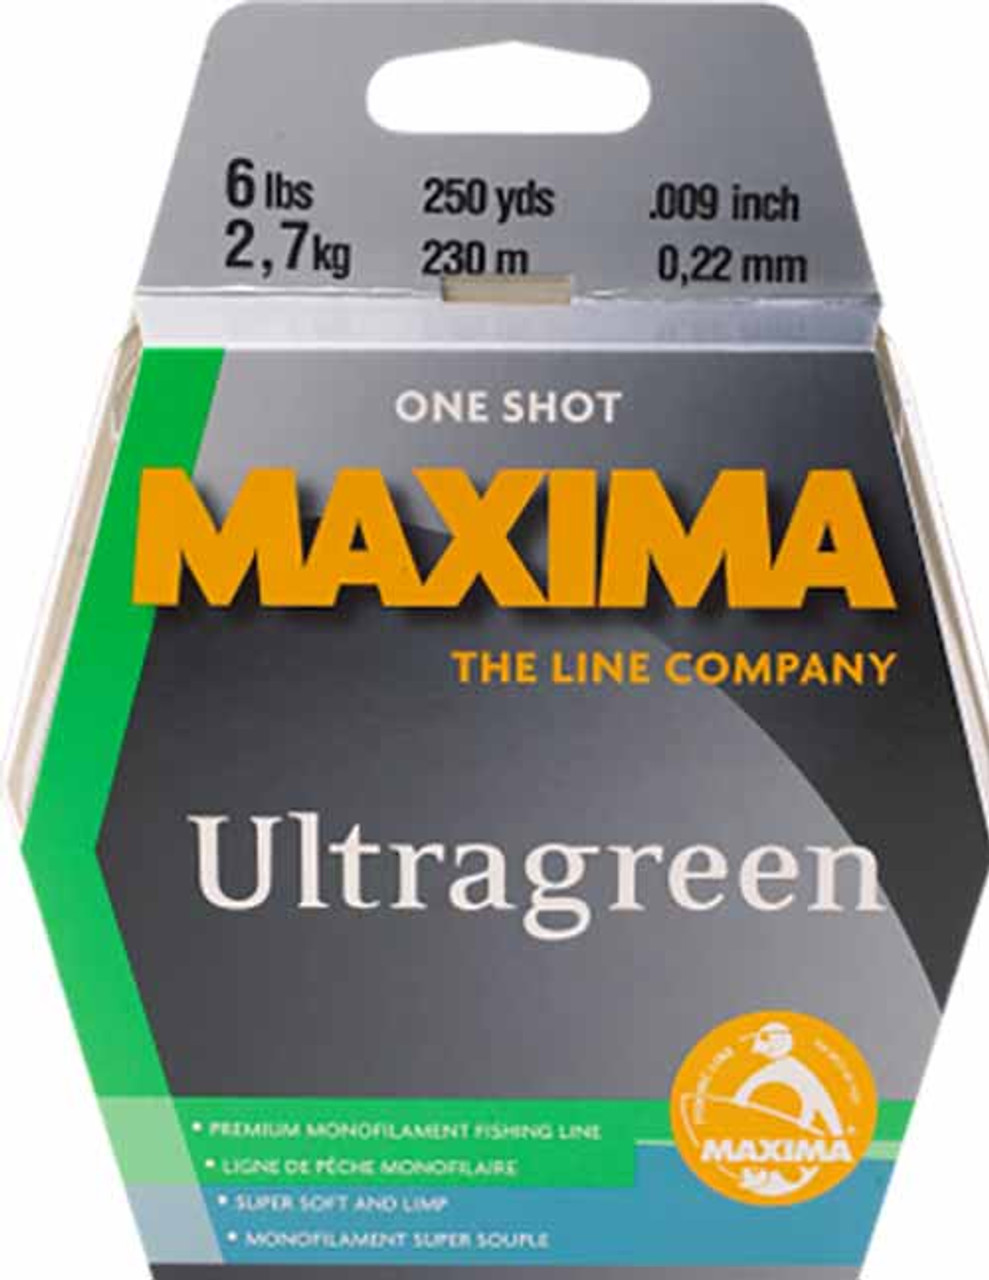 Maxima Ultragreen One Shot Spool - 250yds 25lb